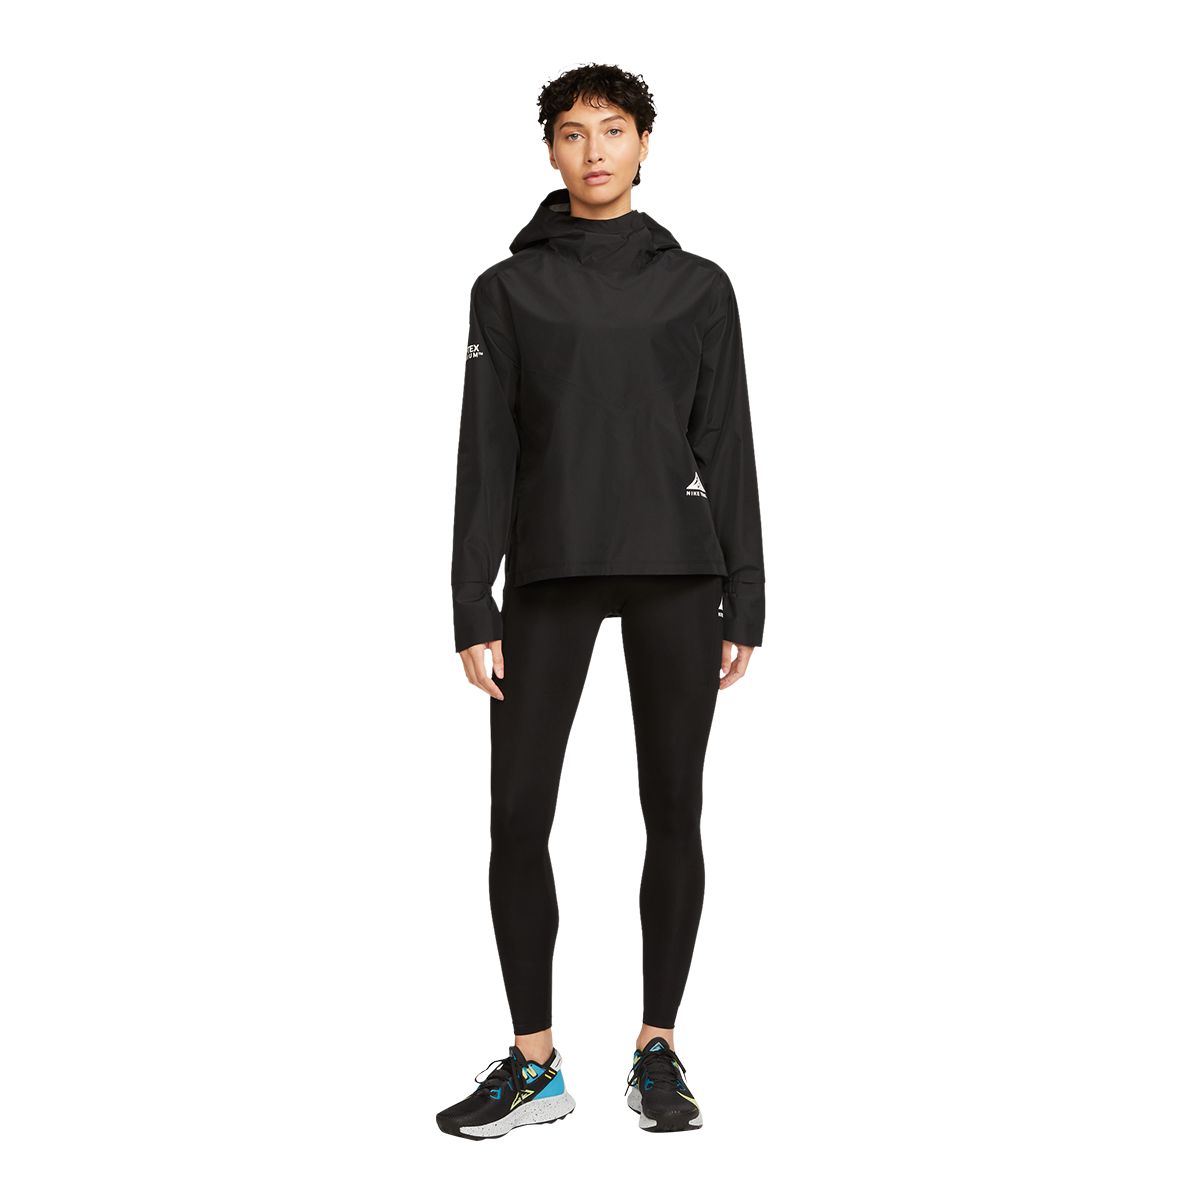 Nike Women's Epic Luxe Leggings Athletic Pants Black Plus Size 2X 20W 22W 